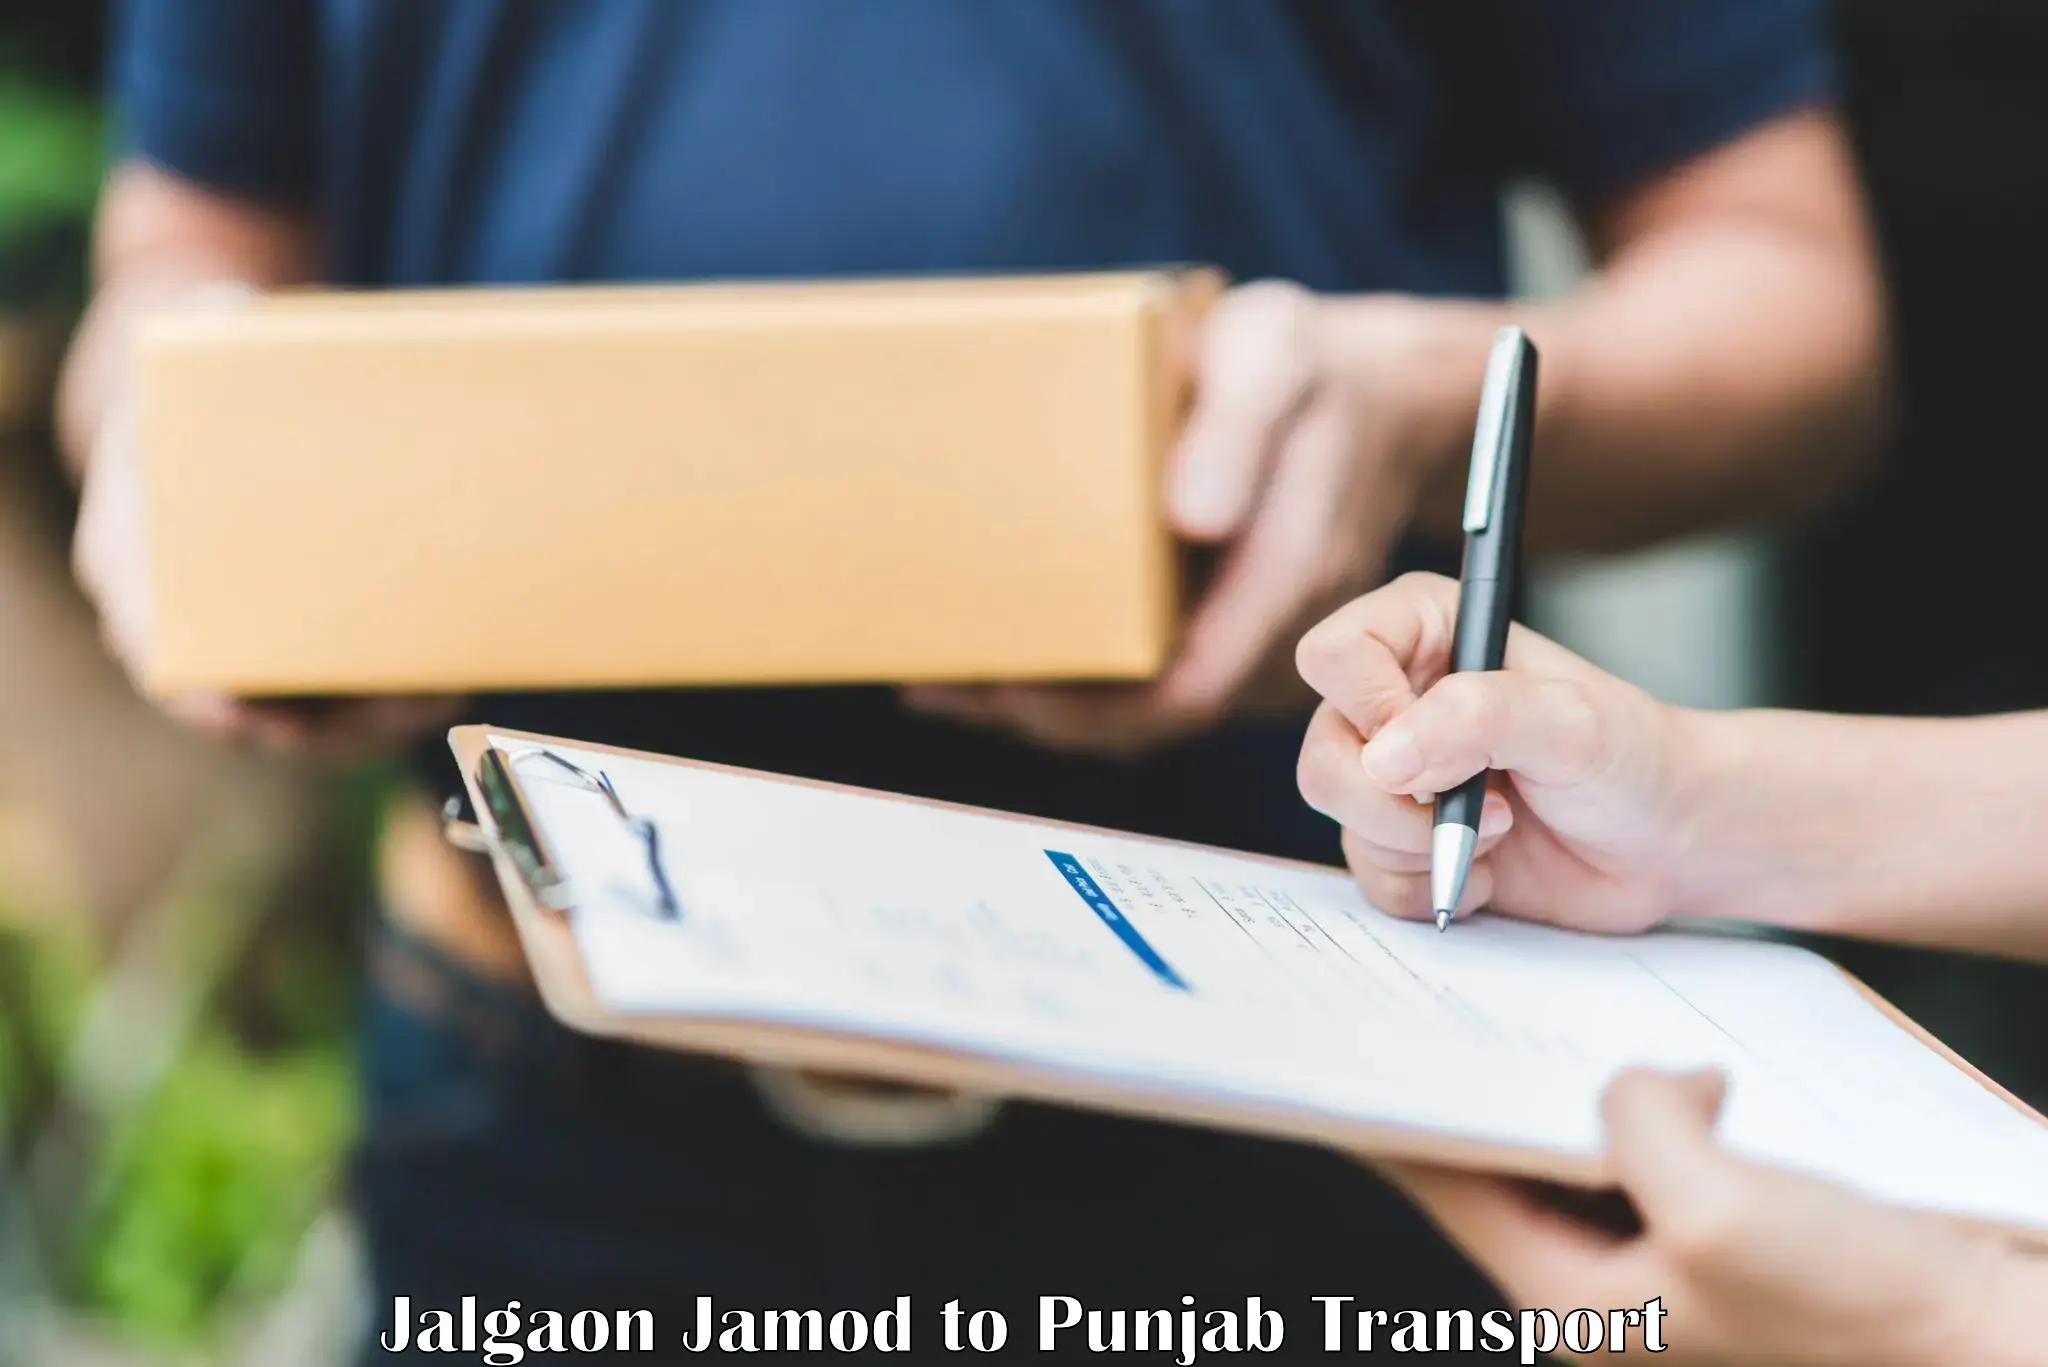 Bike transport service Jalgaon Jamod to Nawanshahr